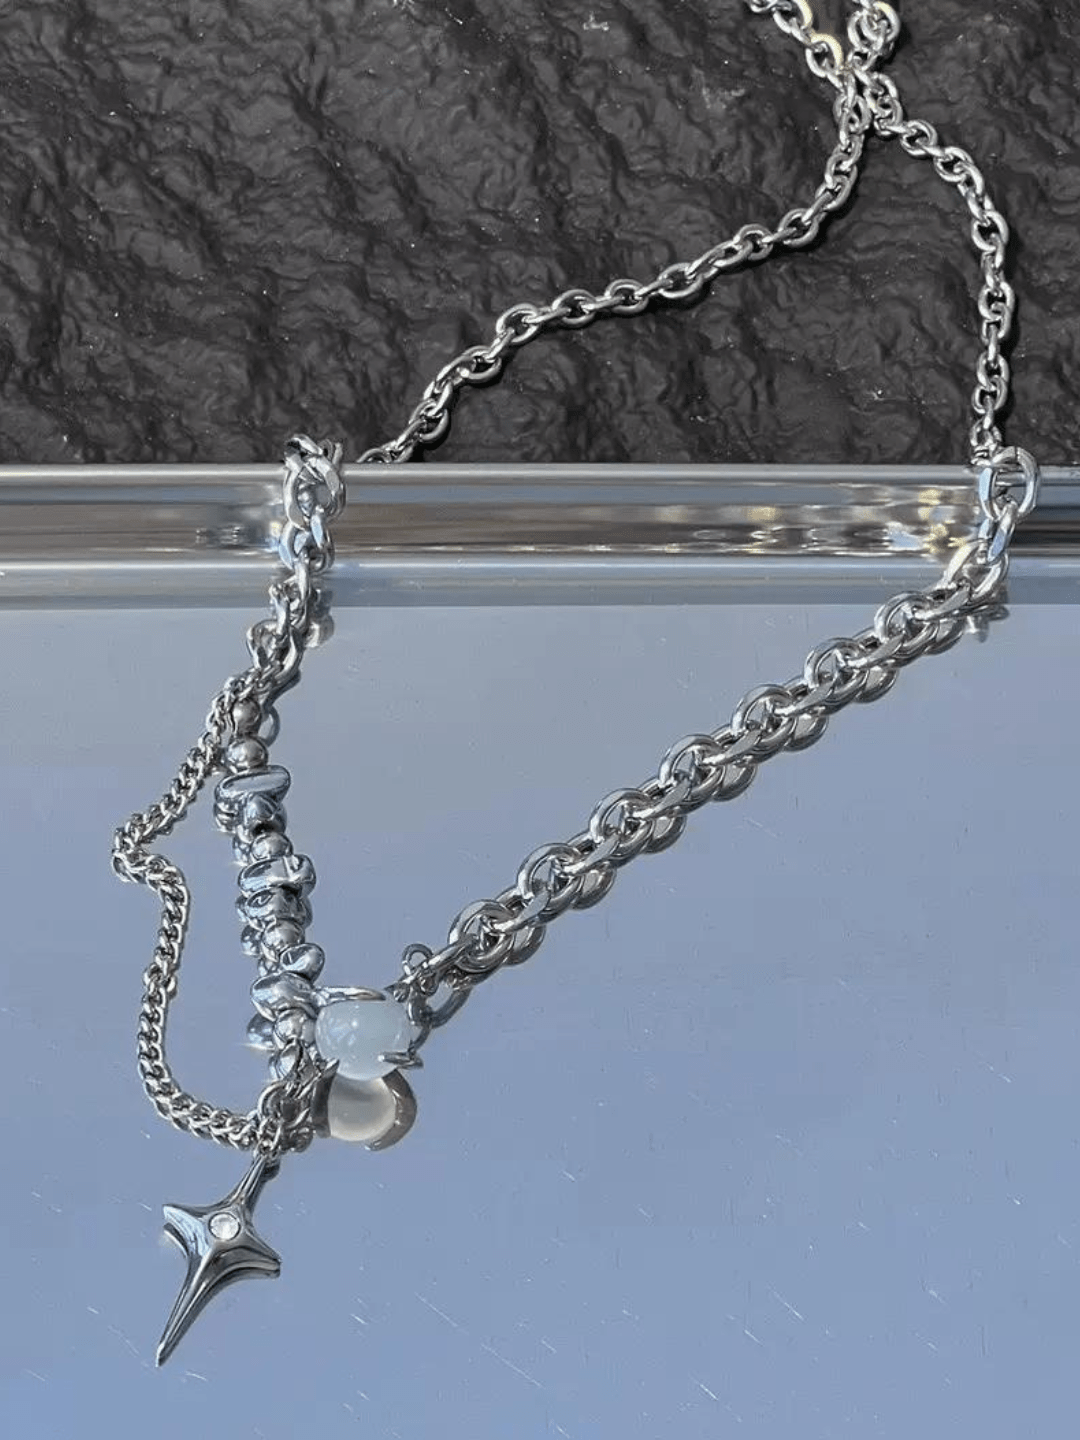 [CHEALIMPID] Star Eyes Titanium Steel Cross Luxury Necklace na929